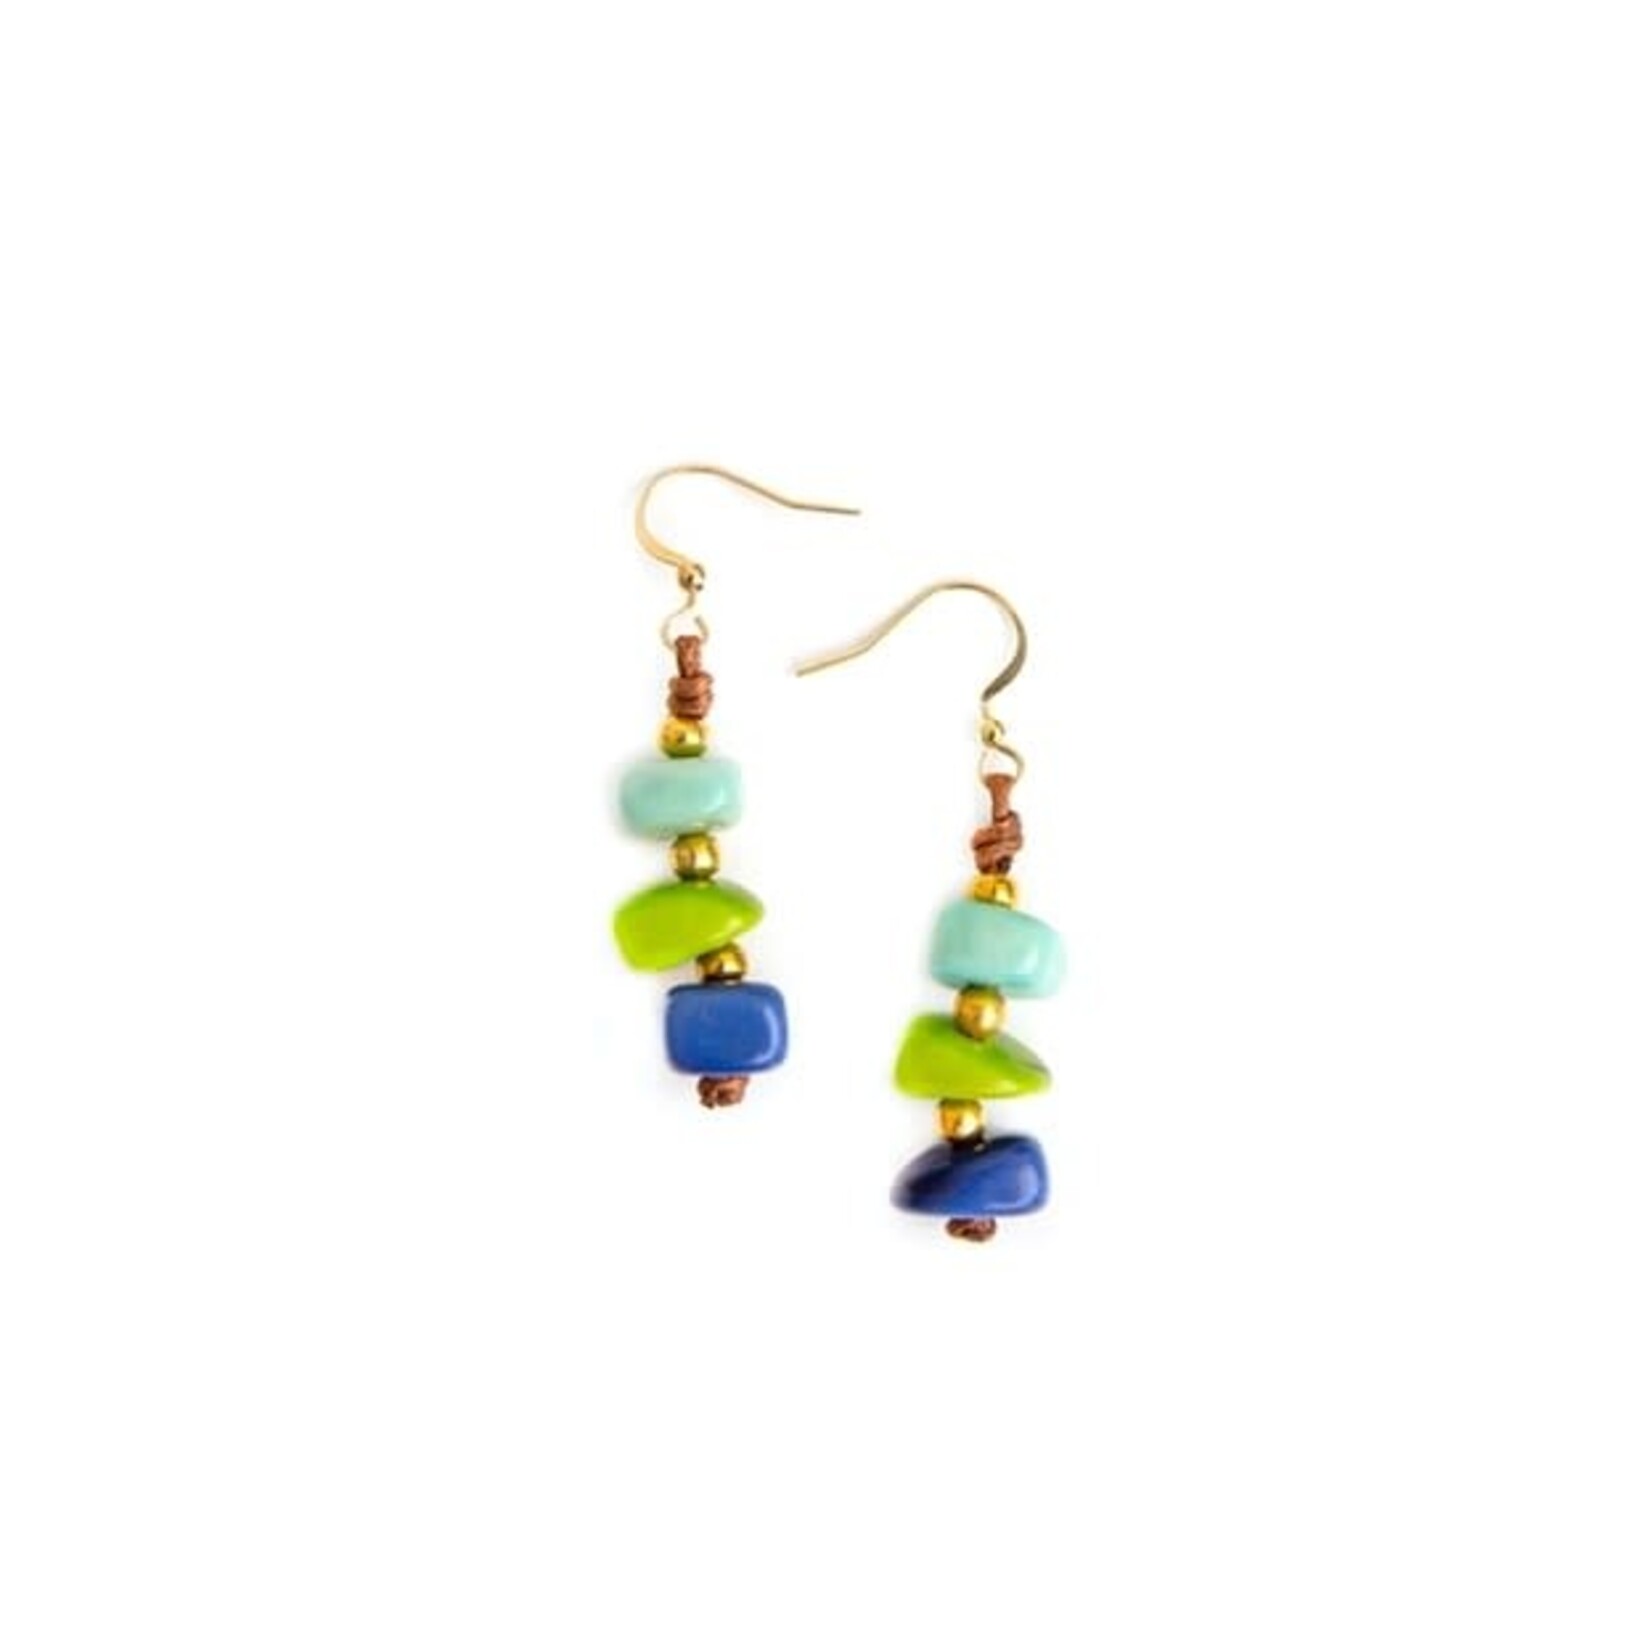 Organic Tagua Jewelry Zoraida Tagua Earrings in Turquoise/Lime/Royal Blue